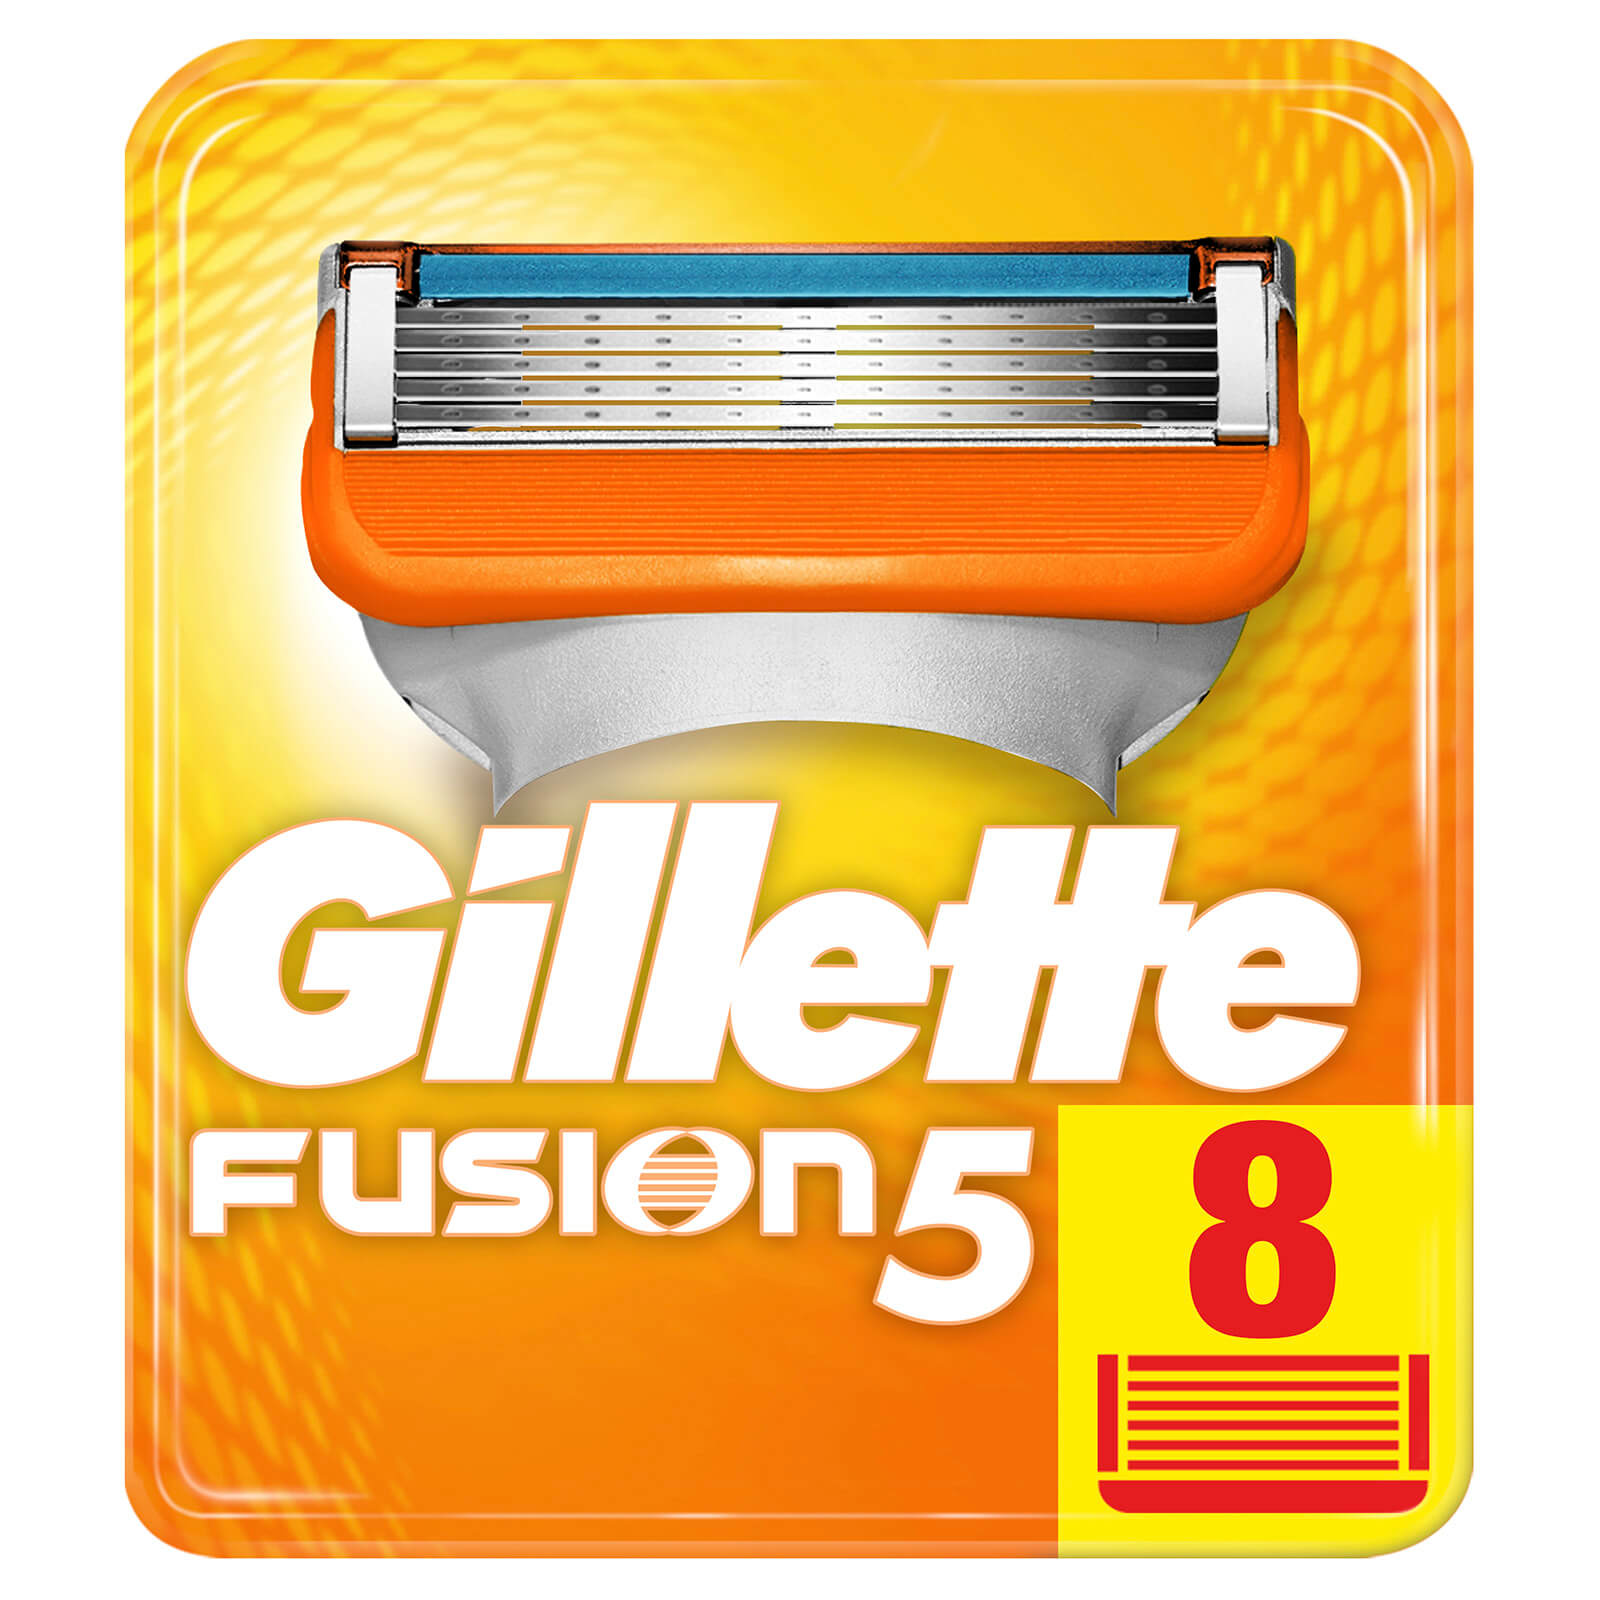 Gillette Fusion Men's System Razor Blades - 8 Count